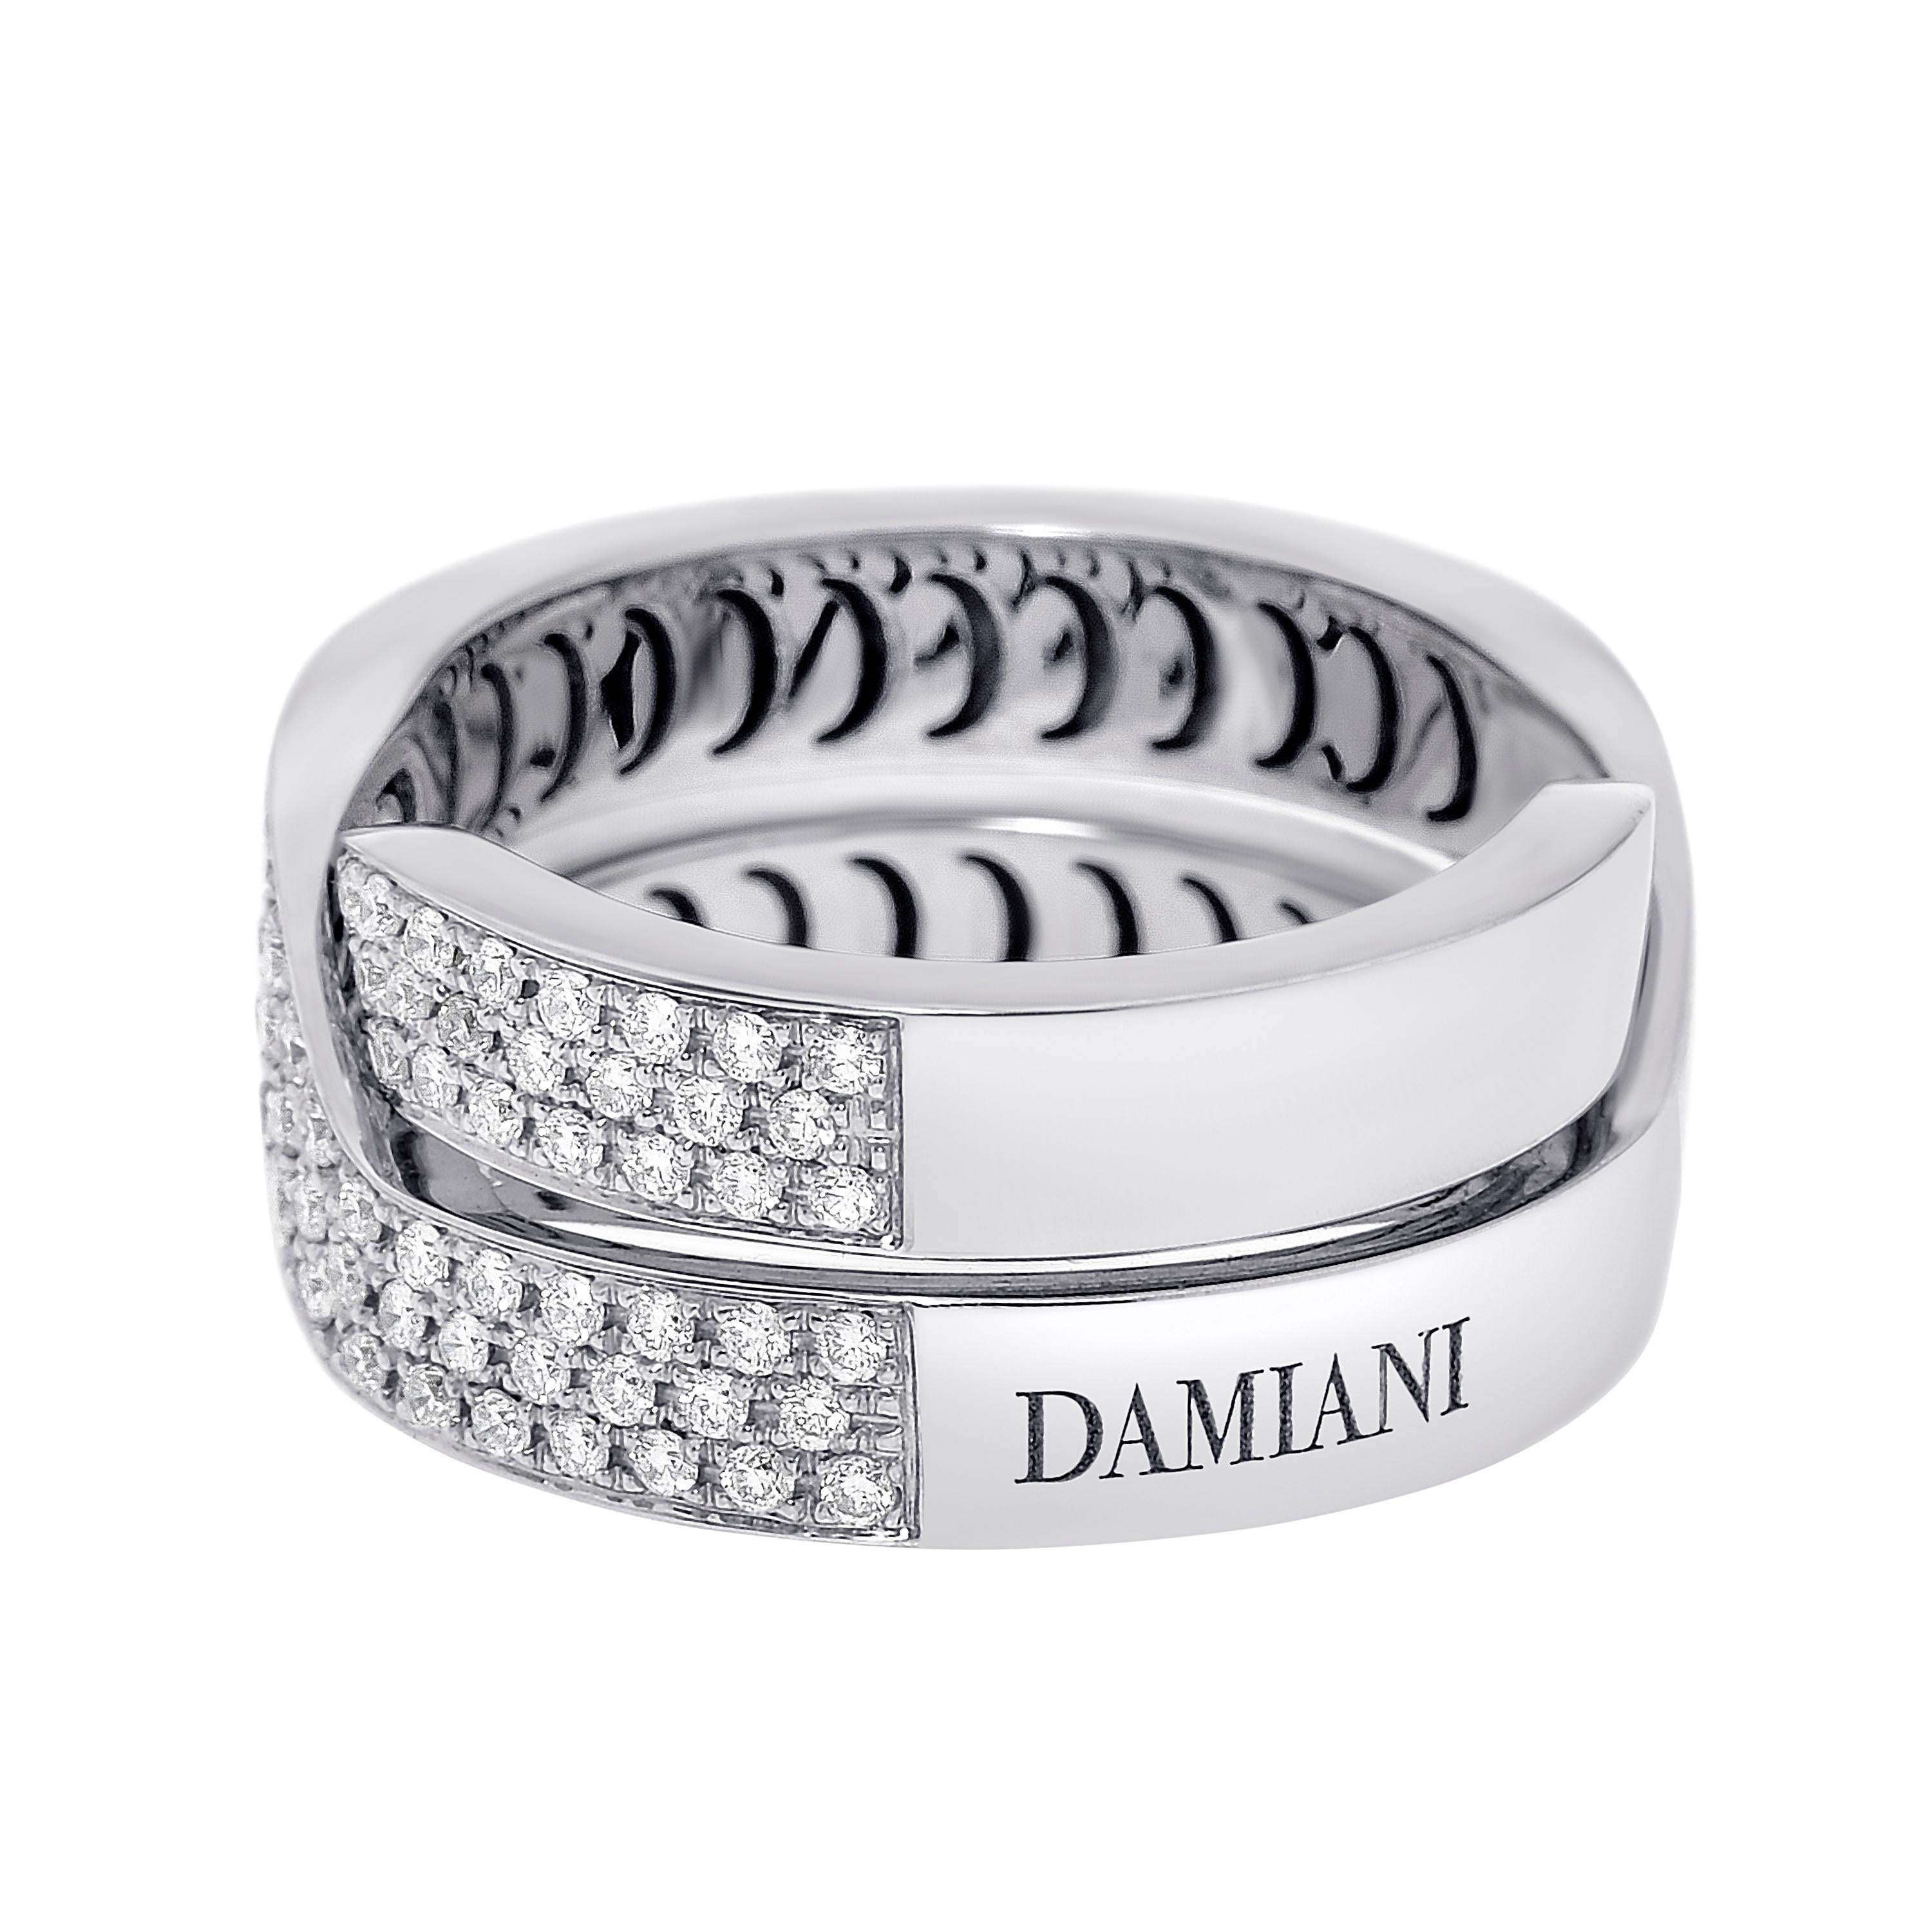 Contemporary Damiani 18K White Gold, Diamond Ring Sz. 6.75 For Sale